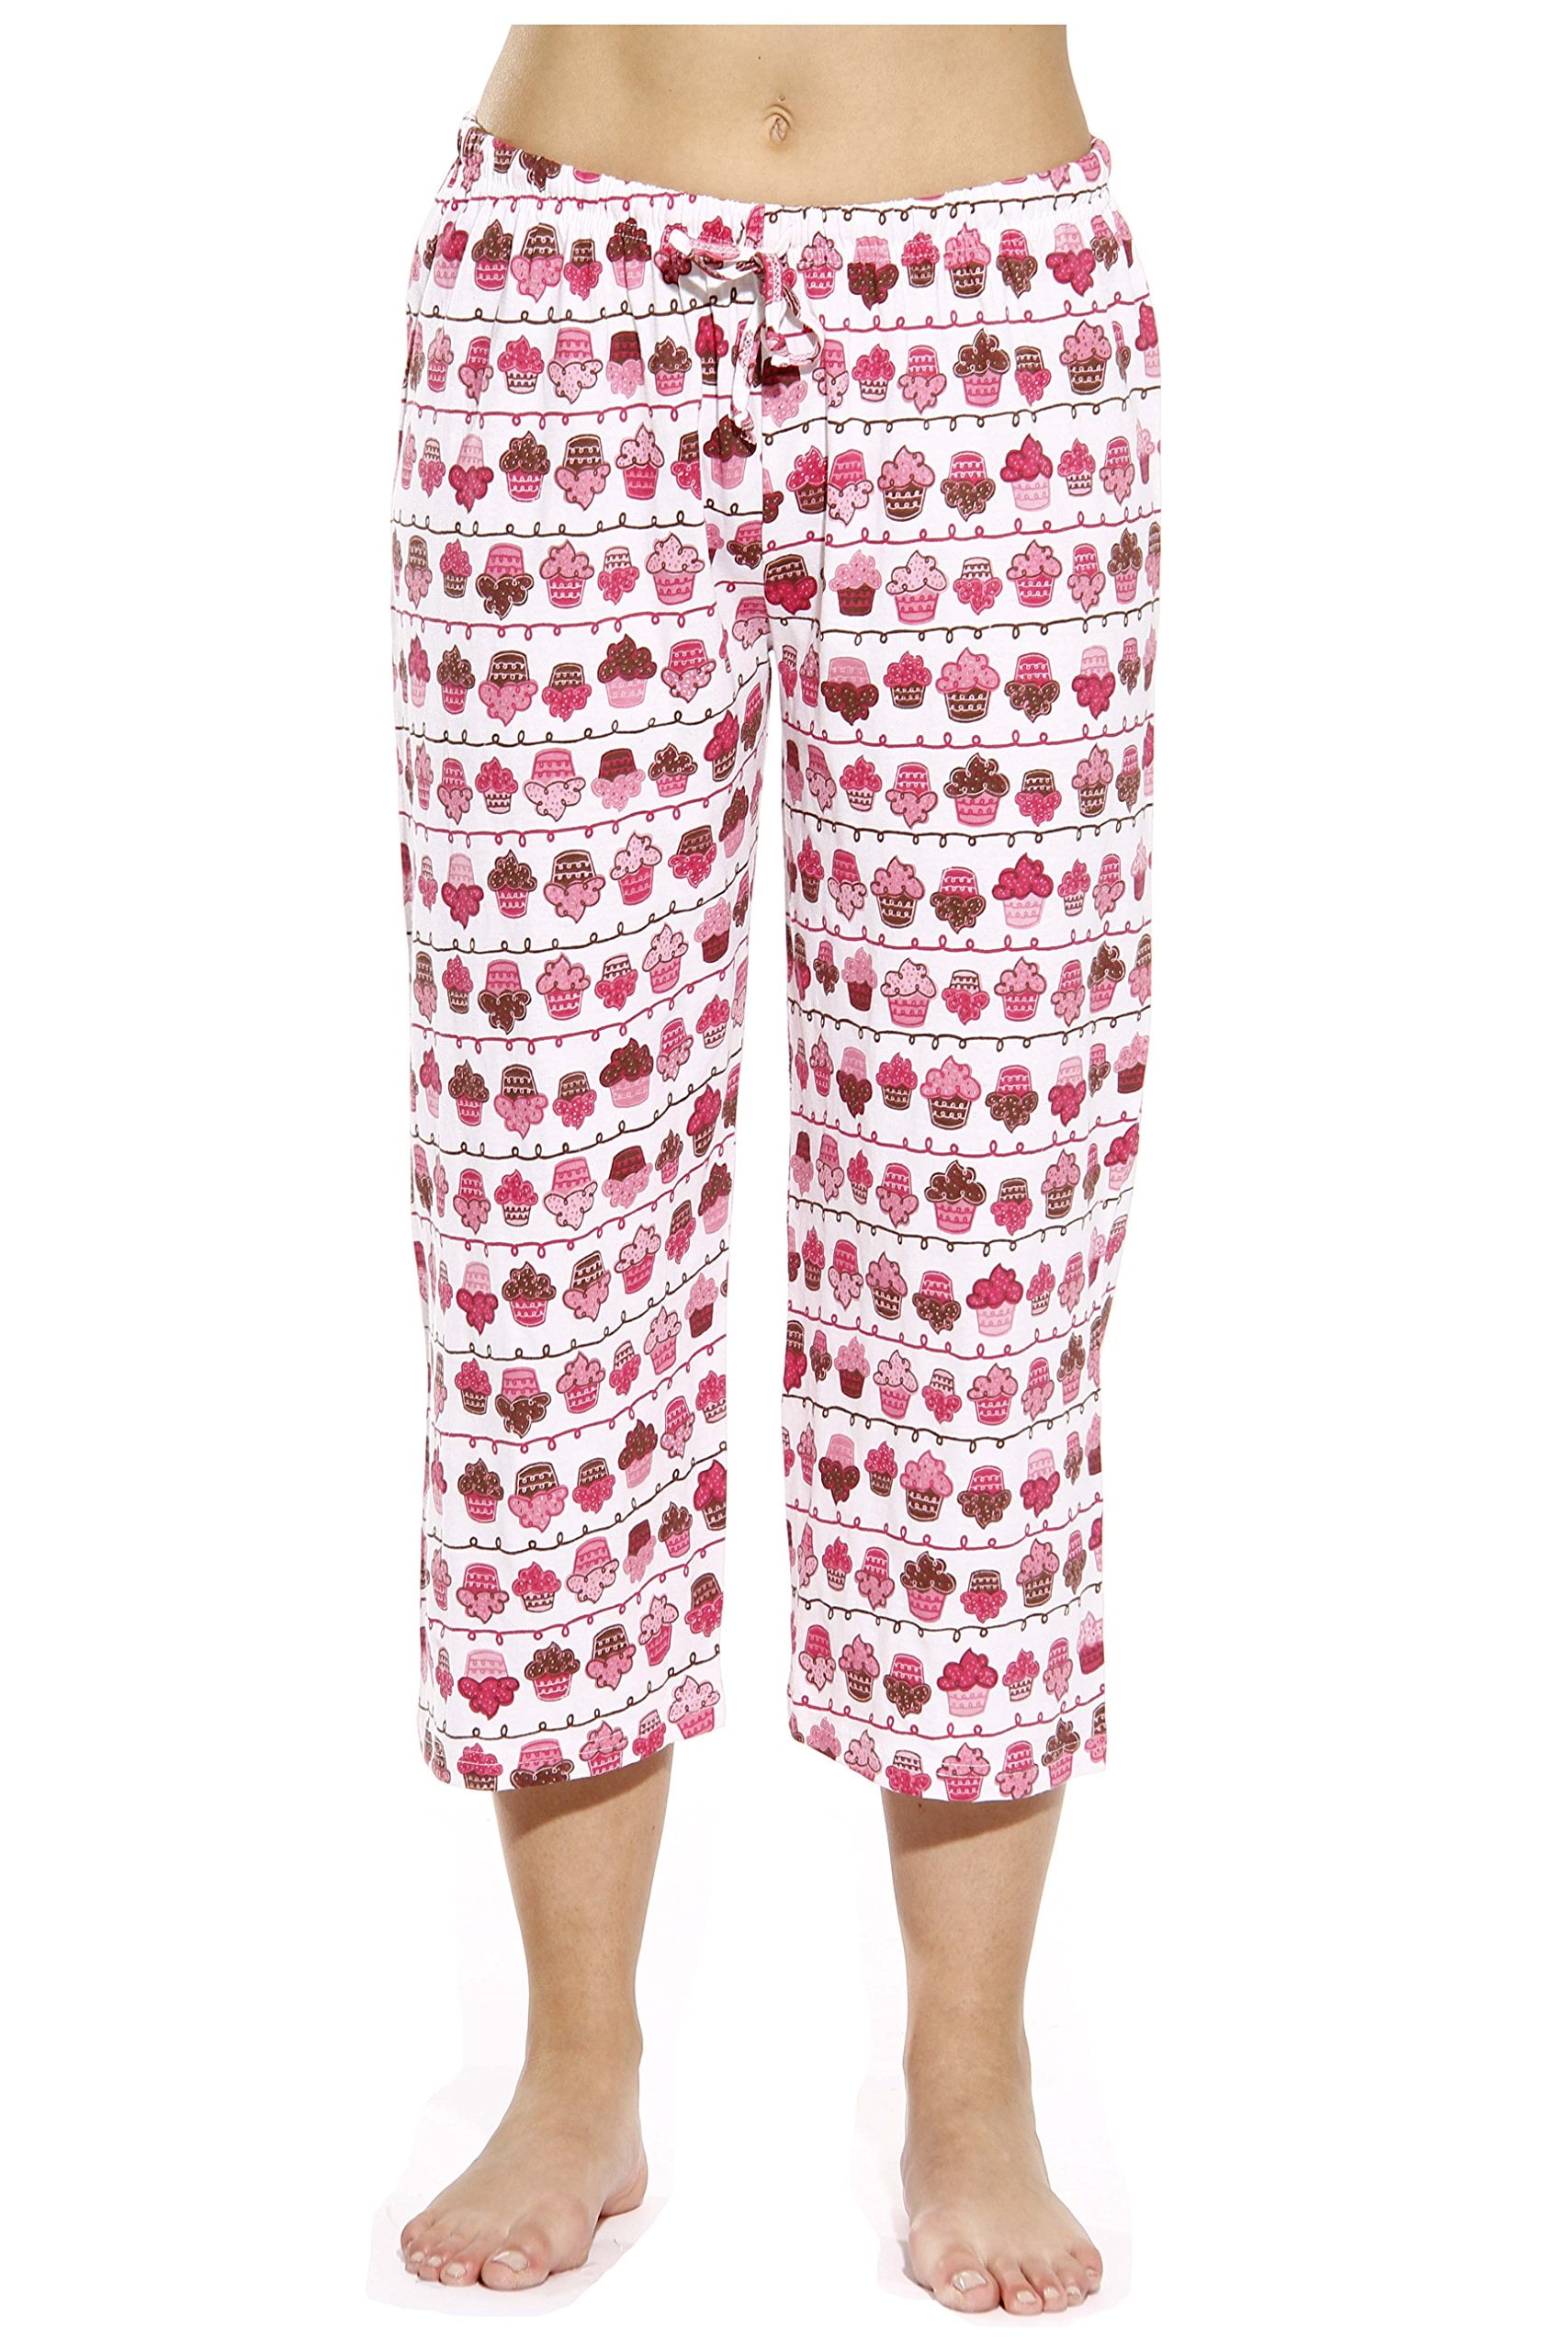 Just Love 100% Cotton Jersey Knit Women Pajama Pants/Sleepwear